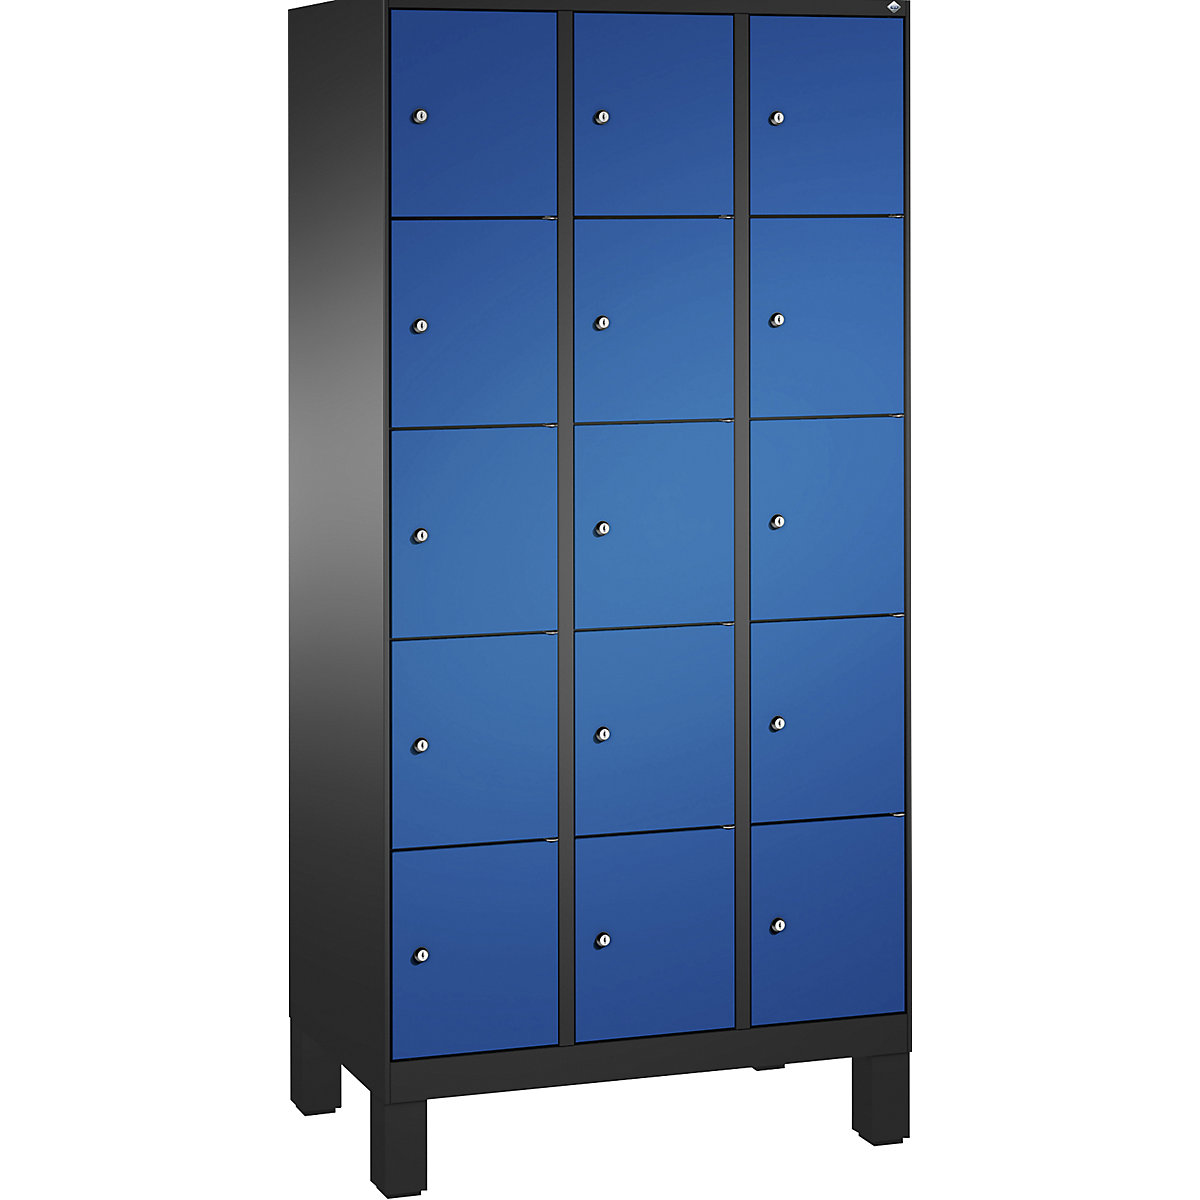 EVOLO locker unit, with feet – C+P, 3 compartments, 5 shelf compartments each, compartment width 300 mm, black grey / gentian blue-4